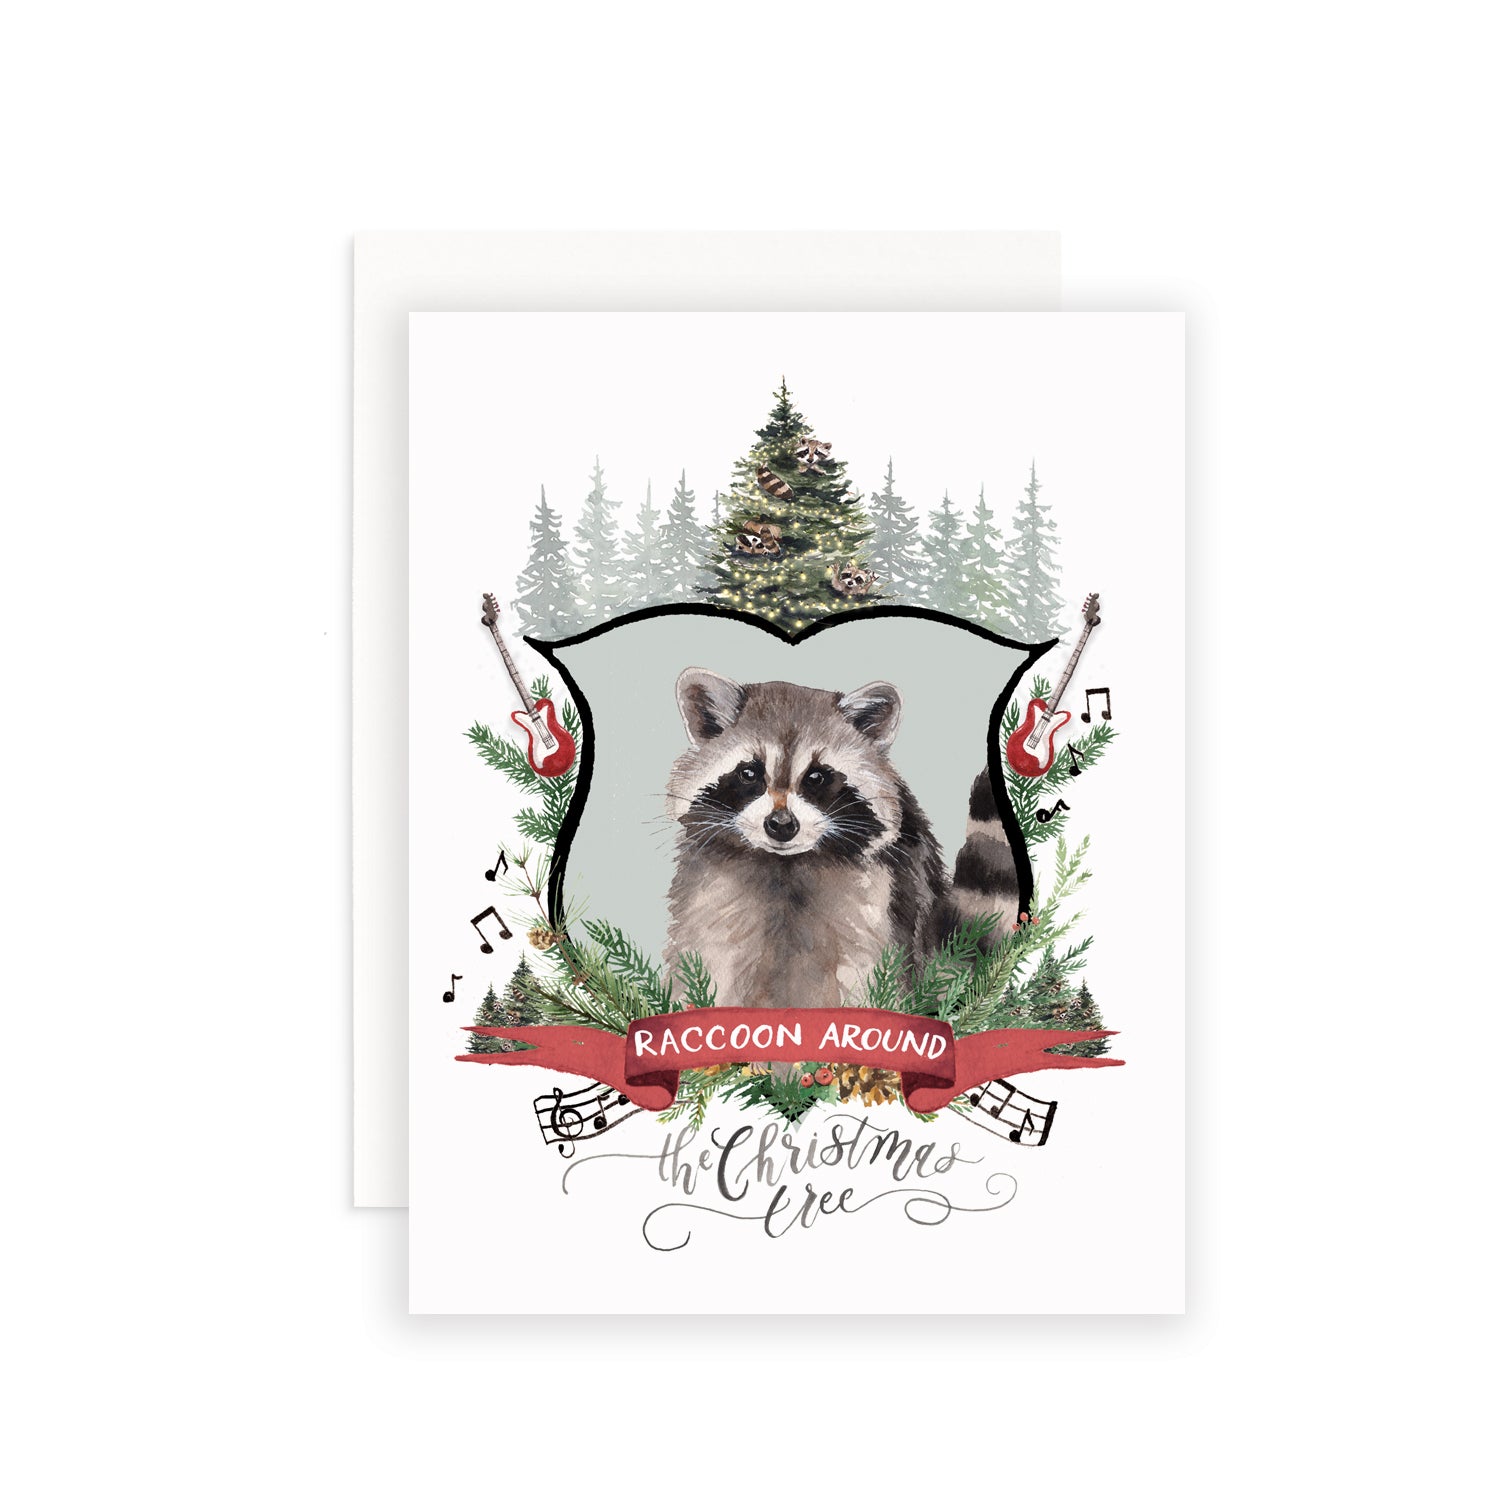 Raccoon Around the Christmas Tree Greeting Card